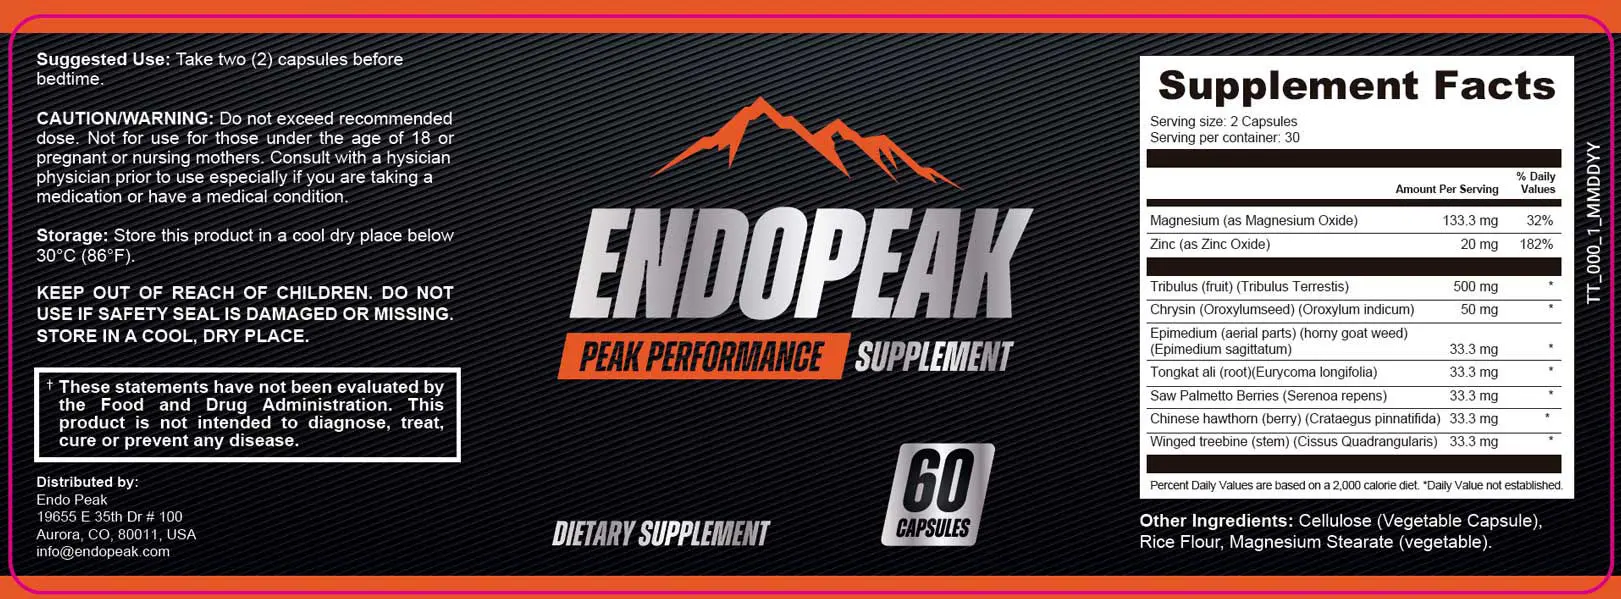 endopeak-supplement-ingredients